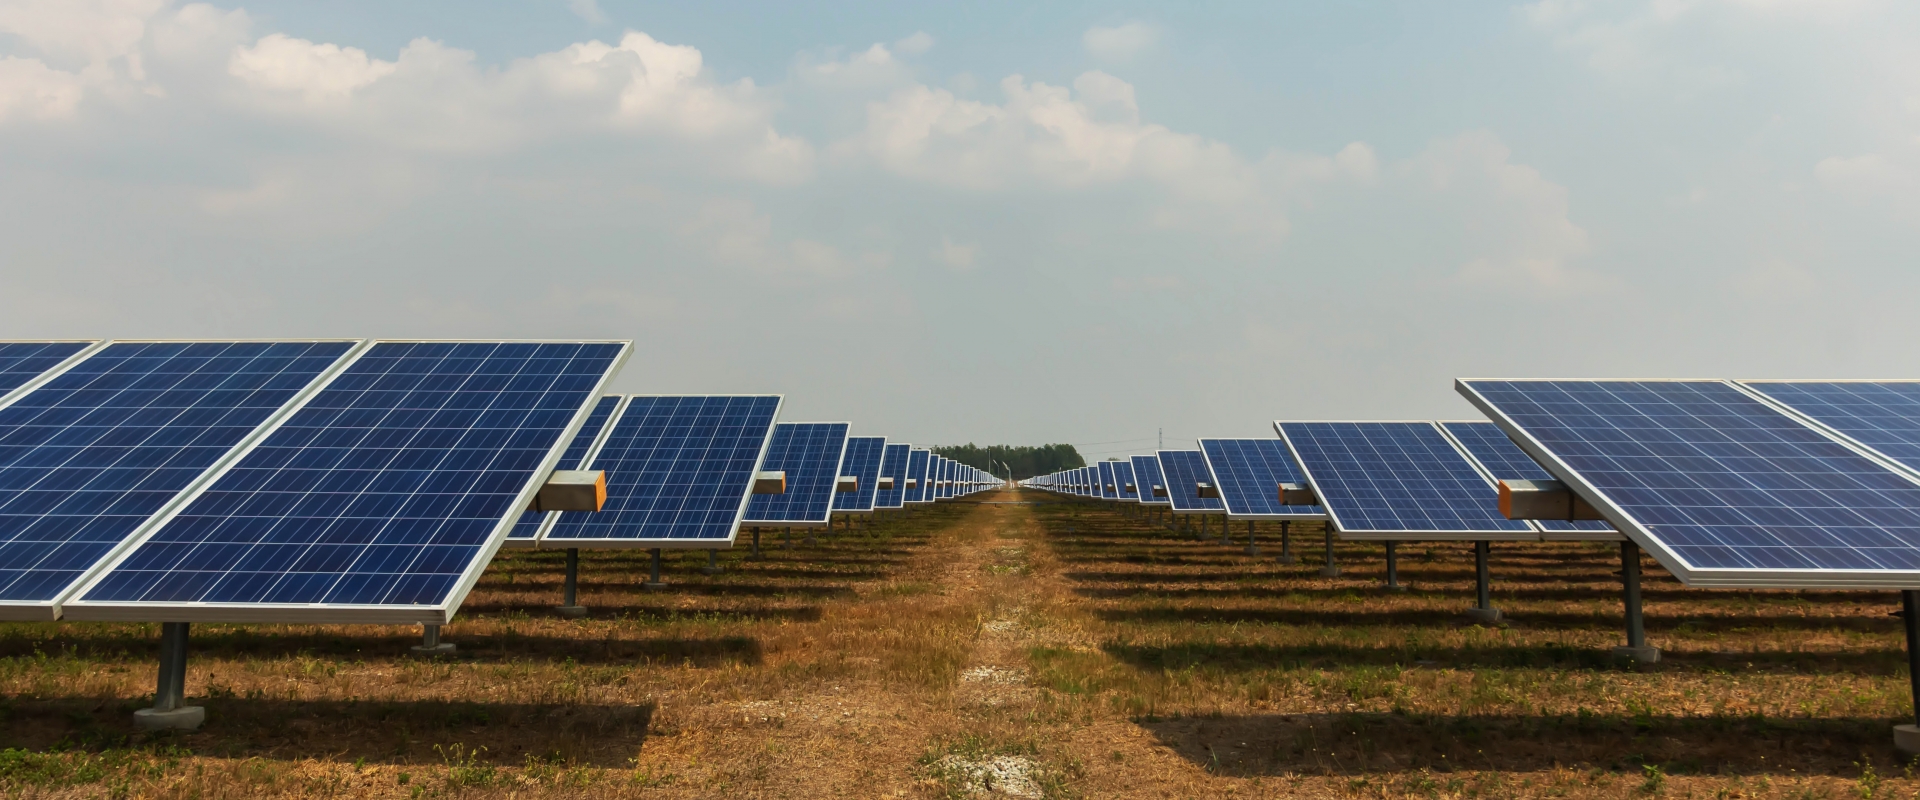 solar panels in solar farm